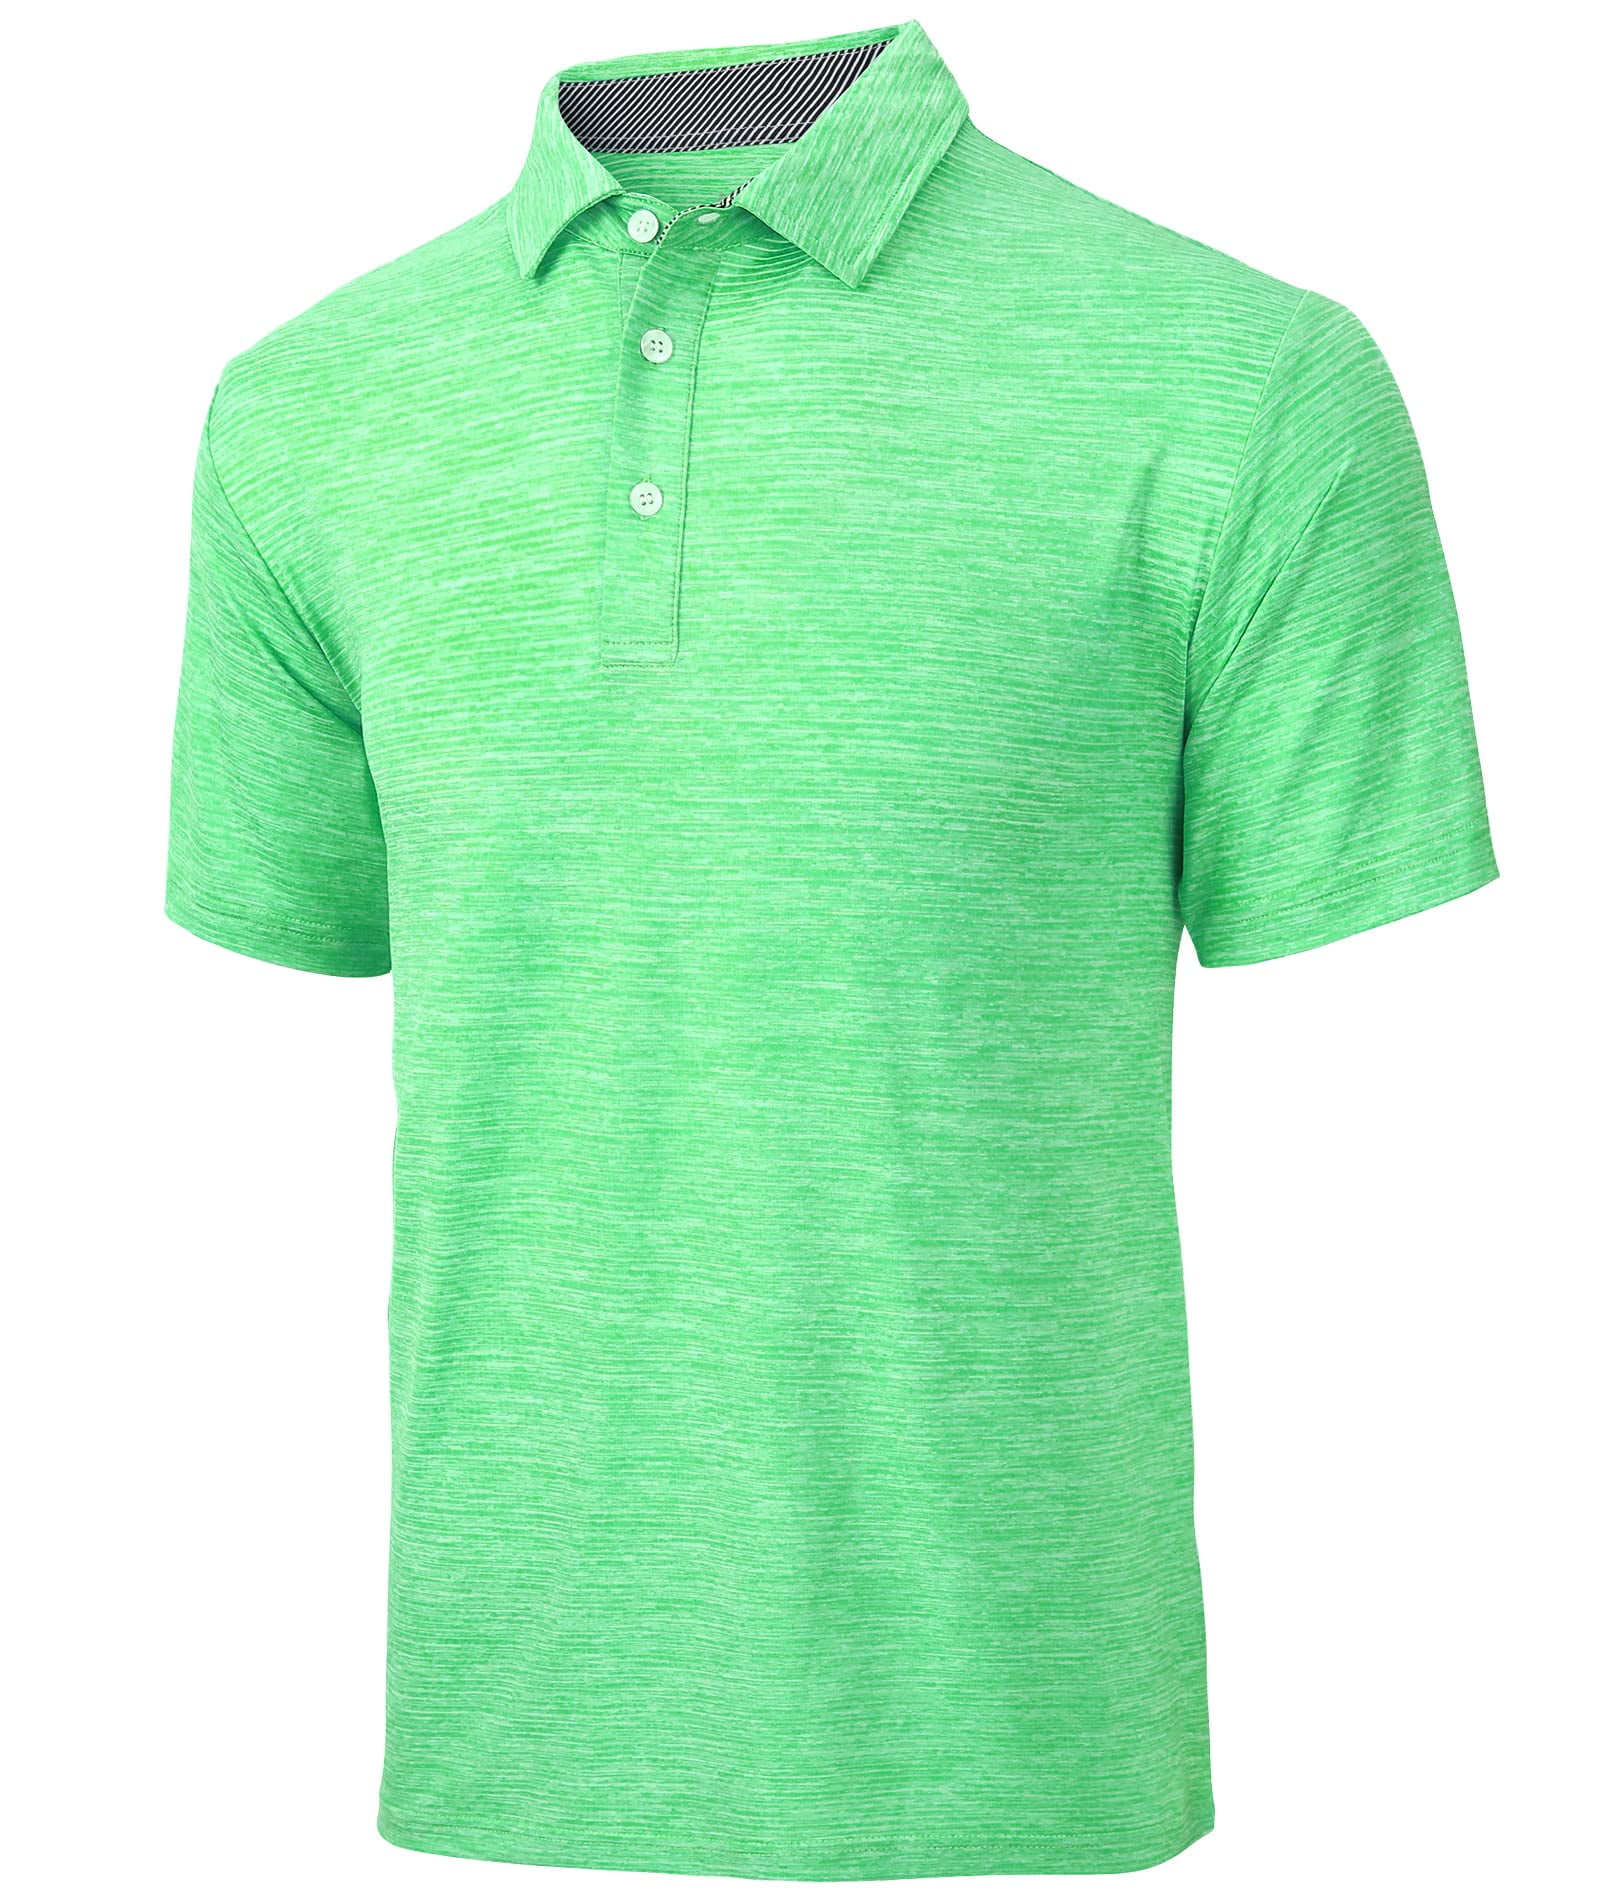 SCODI Mens Golf Polo Shirt Short Sleeve Casual Polo Shirt for Men  Performance Moisture-Wicking Cationic Shirt Casual Sports Tennis T-Shirts  Green 2XL